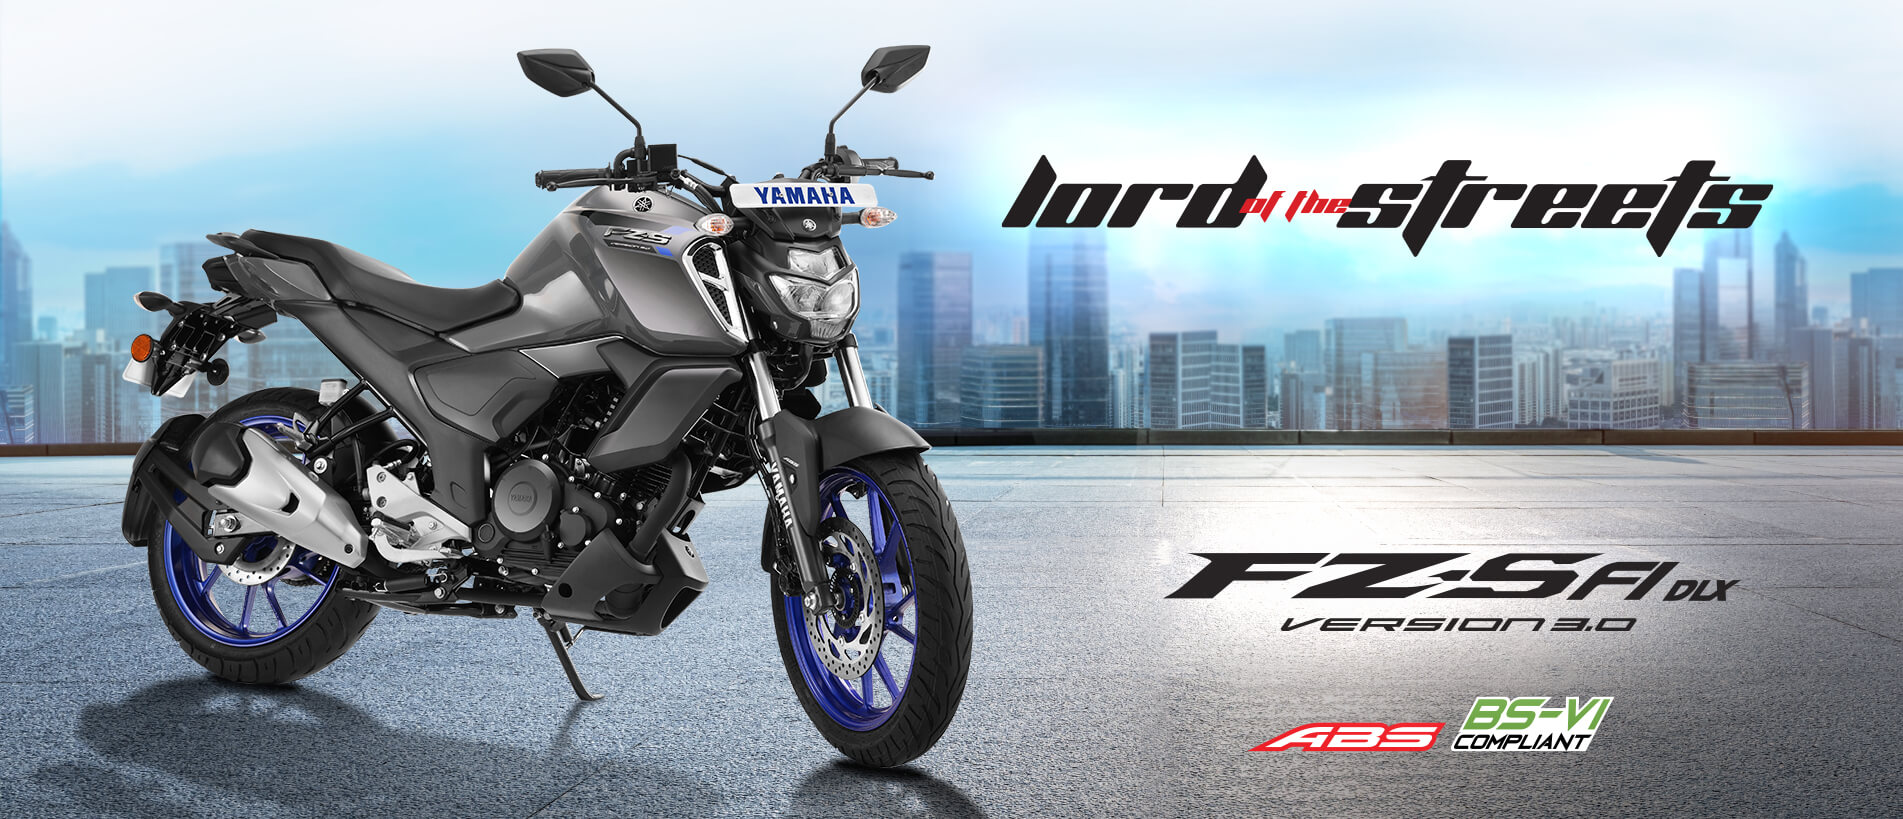 Yamaha FZS v3 price nepal